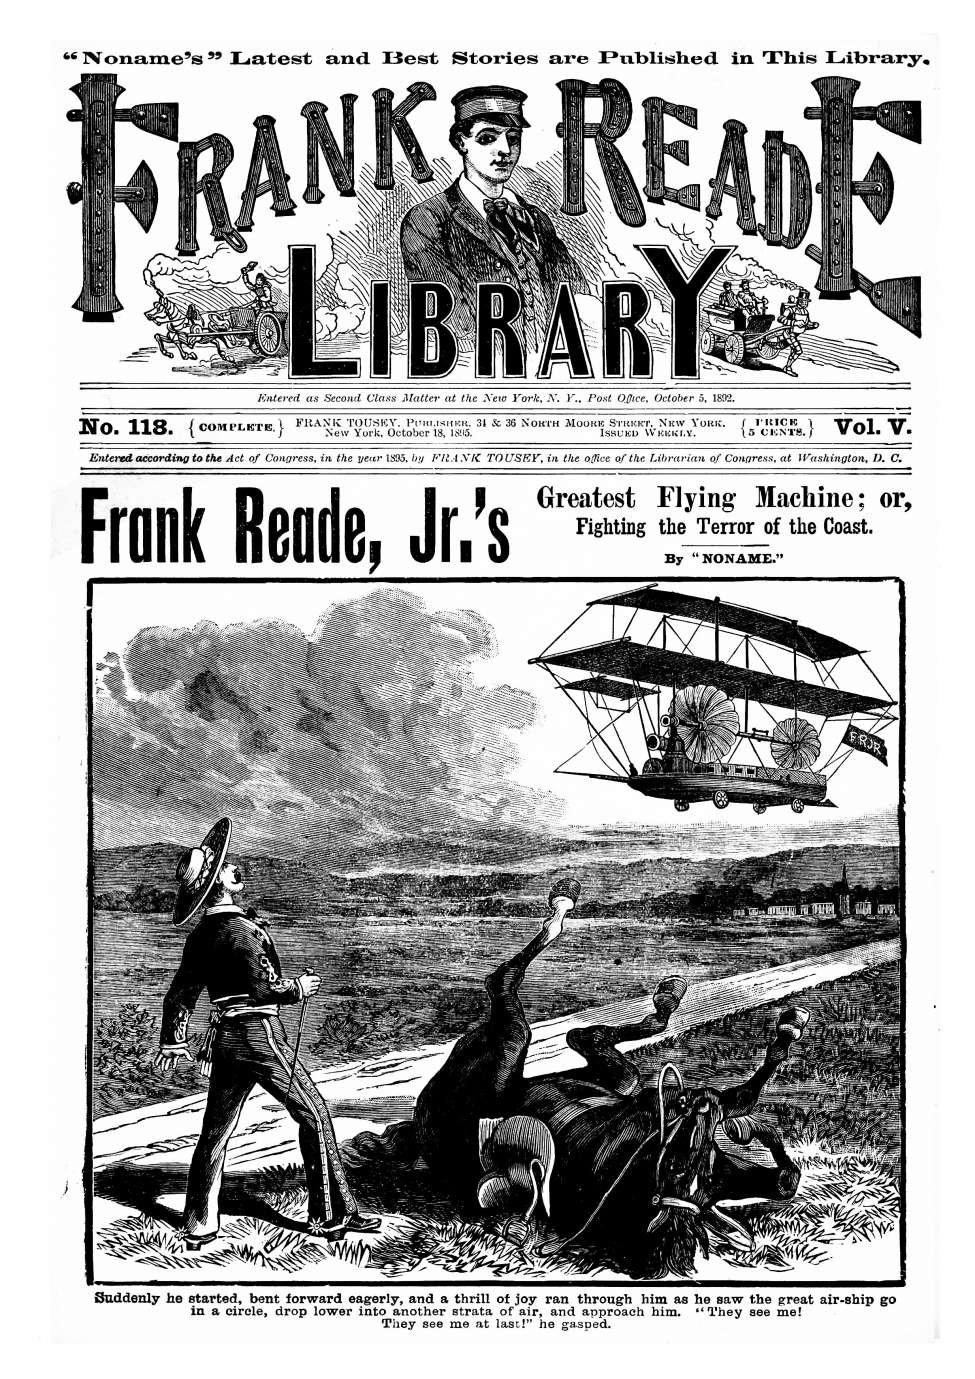 Book Cover For v05 118 - Frank Reade, Jr.s Greatest Flying Machine